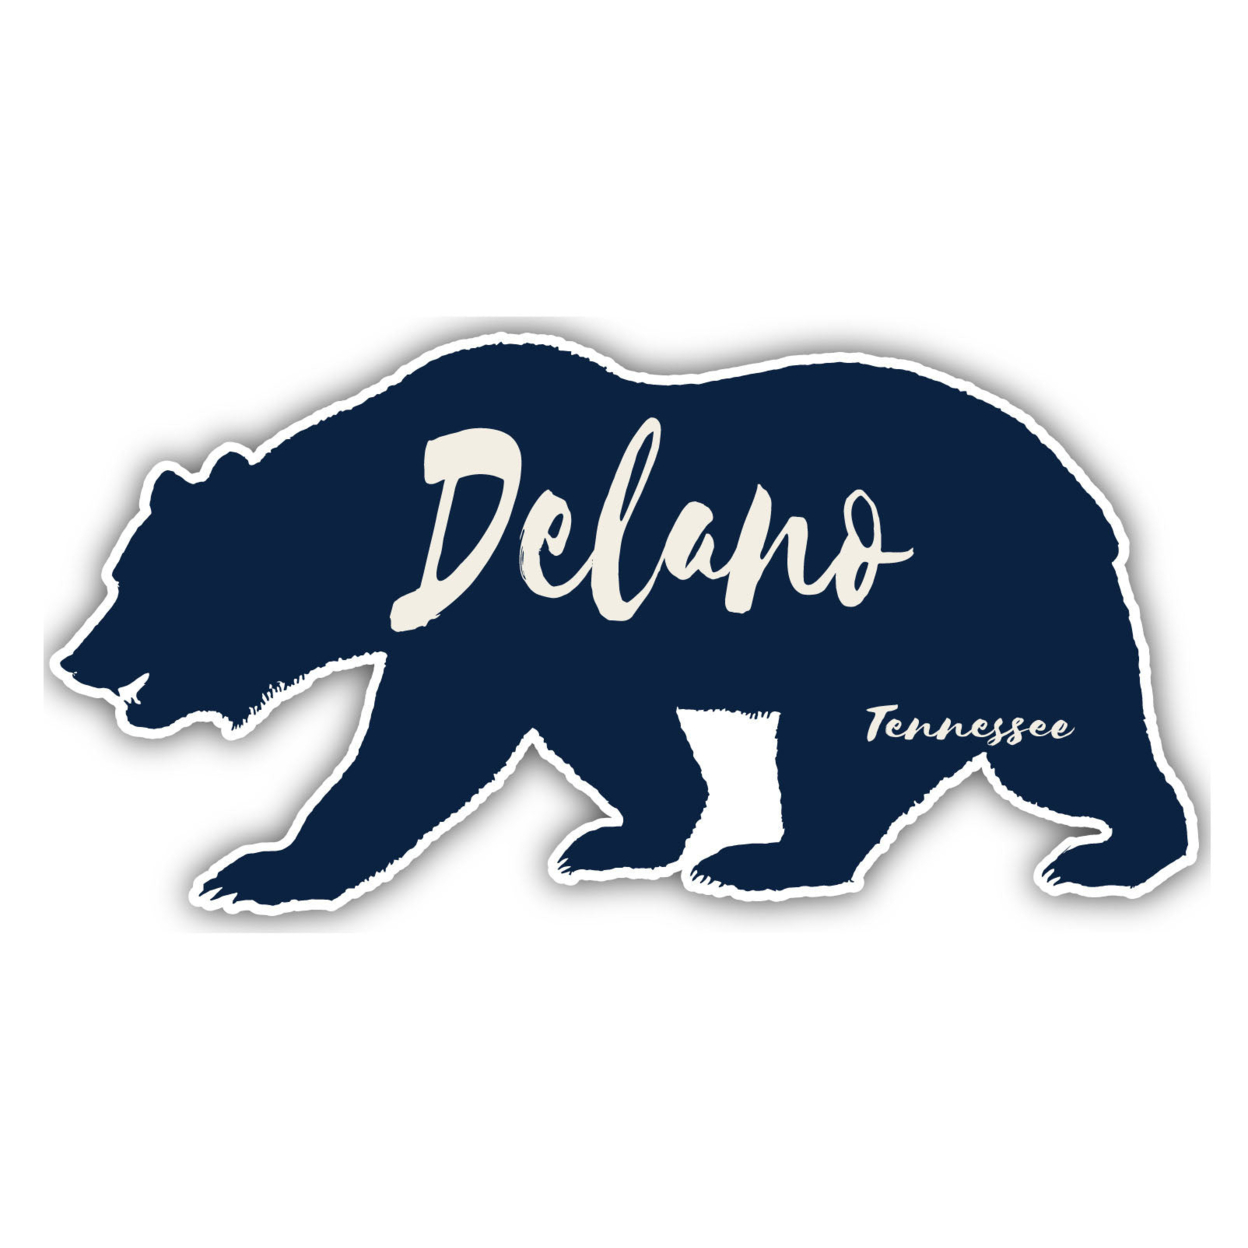 Delano Tennessee Souvenir Decorative Stickers (Choose Theme And Size) - Single Unit, 12-Inch, Bear